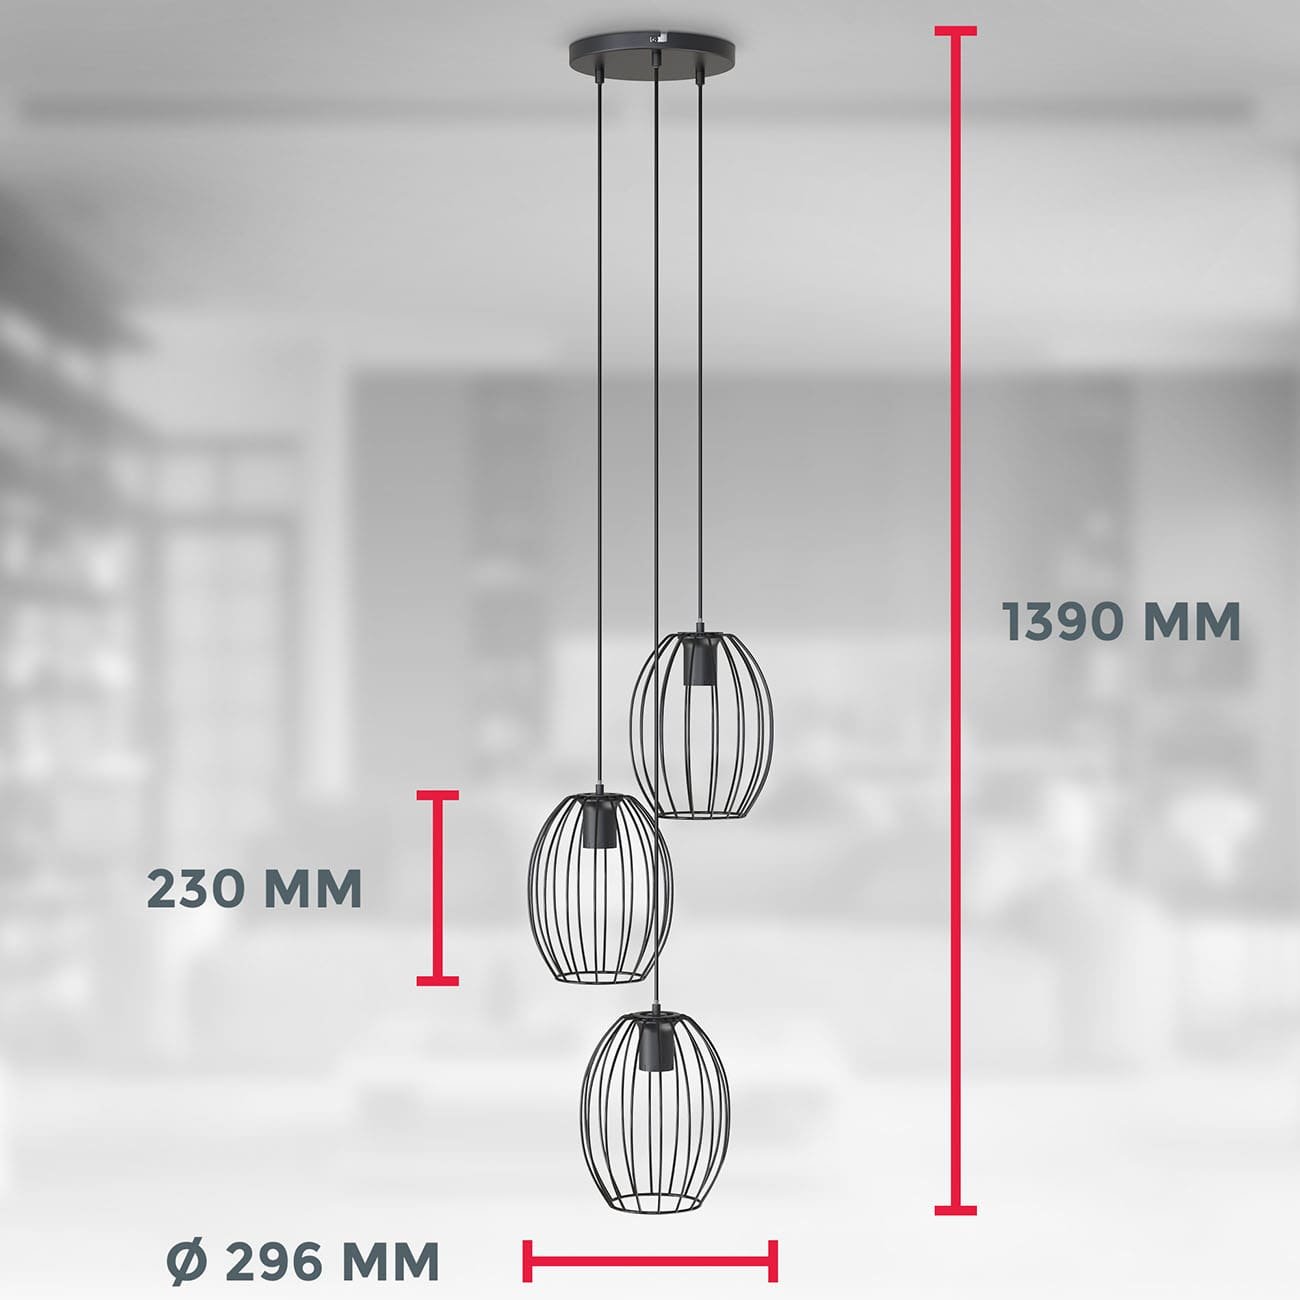 LED Pendelleuchte, 3-flammige Draht-Pendelleuchte, E27 Fassung, 296x1390 mm, schwarz, Metall, IP20 Schutzart - 7